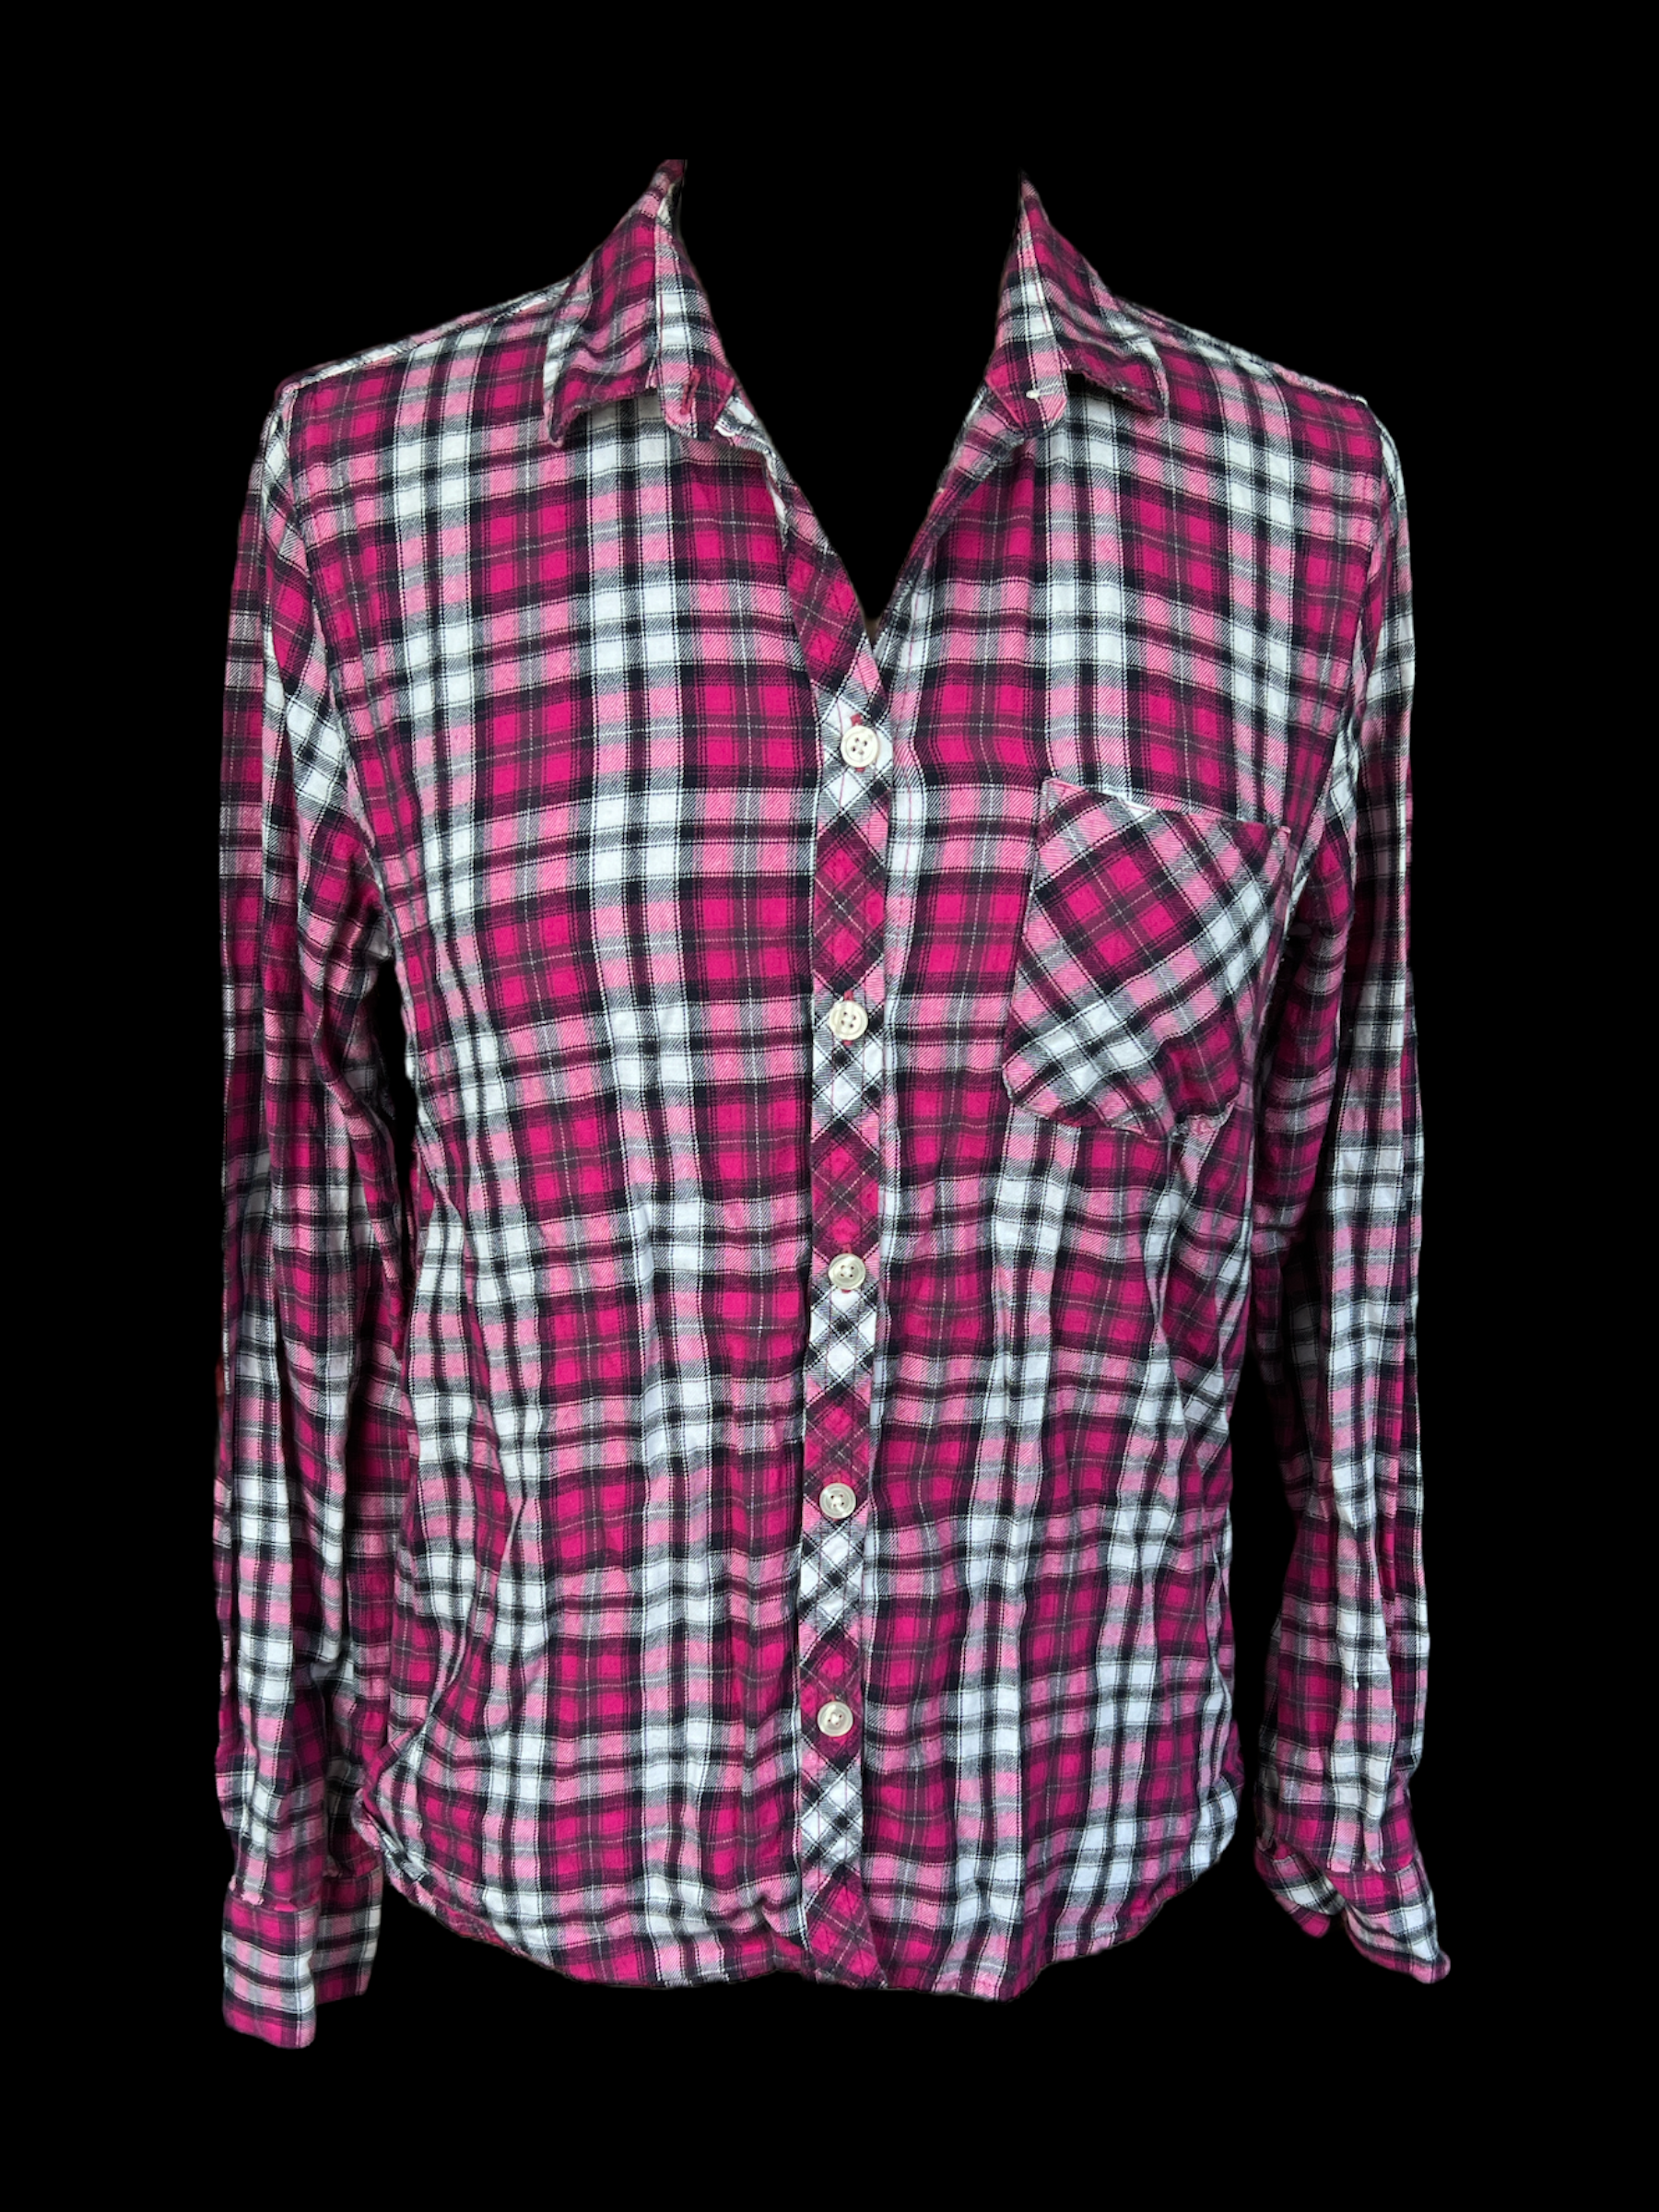 M/L Pink, black, & white plaid flannel button down w/ front pocket